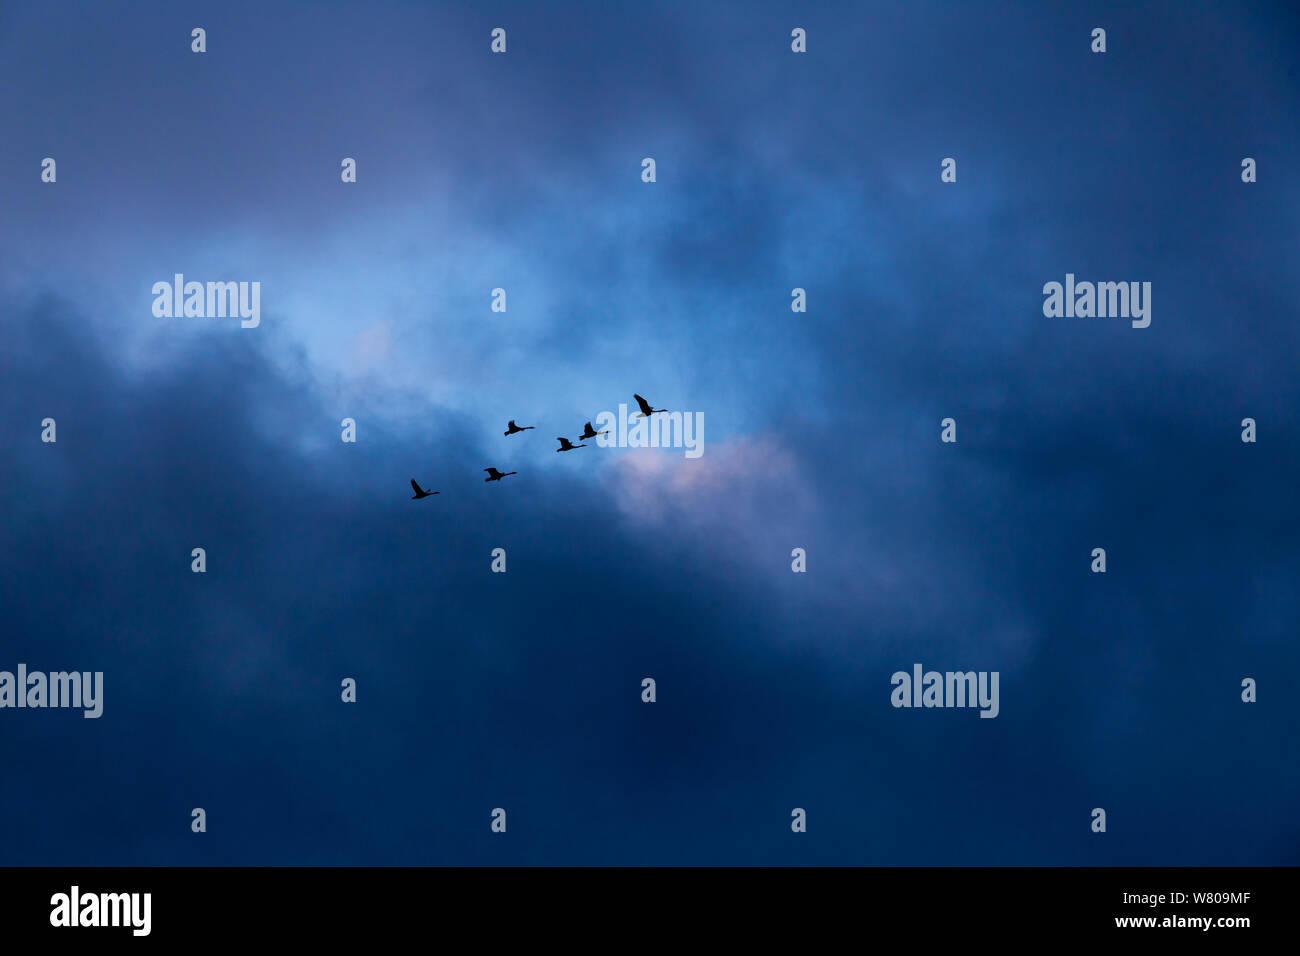 Swans flying in sky with dark overtone Stock Photo